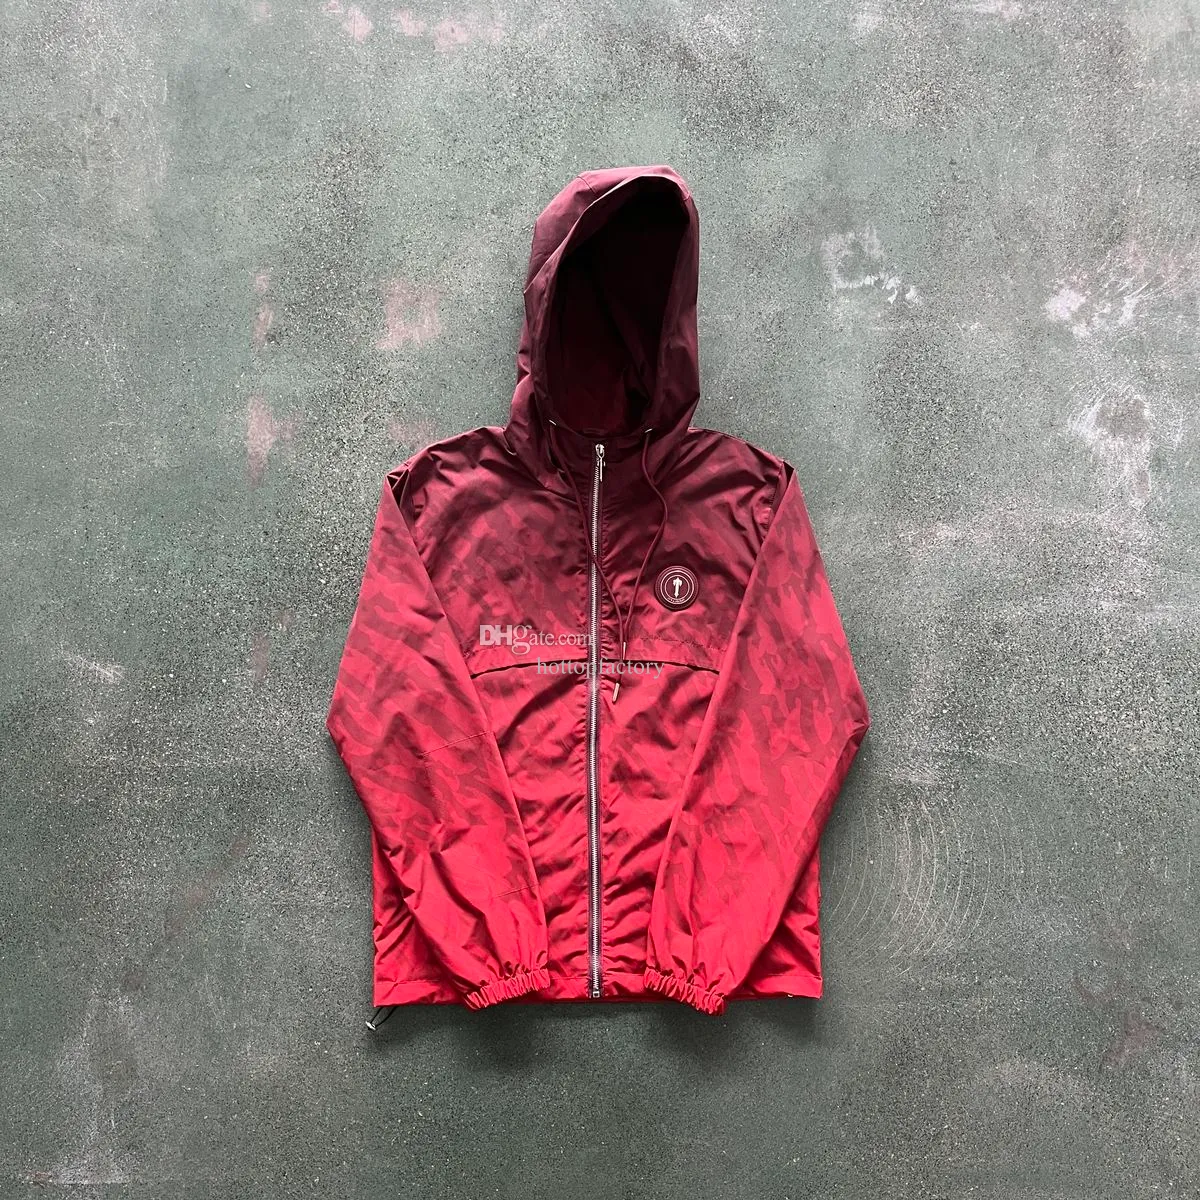 Hot Selling Trapstar Jacket Men's Hoodie coats IRONGATE T WINDBREAKER - RED 1to1 Quality Women's Coat EU Sizes XS-XL